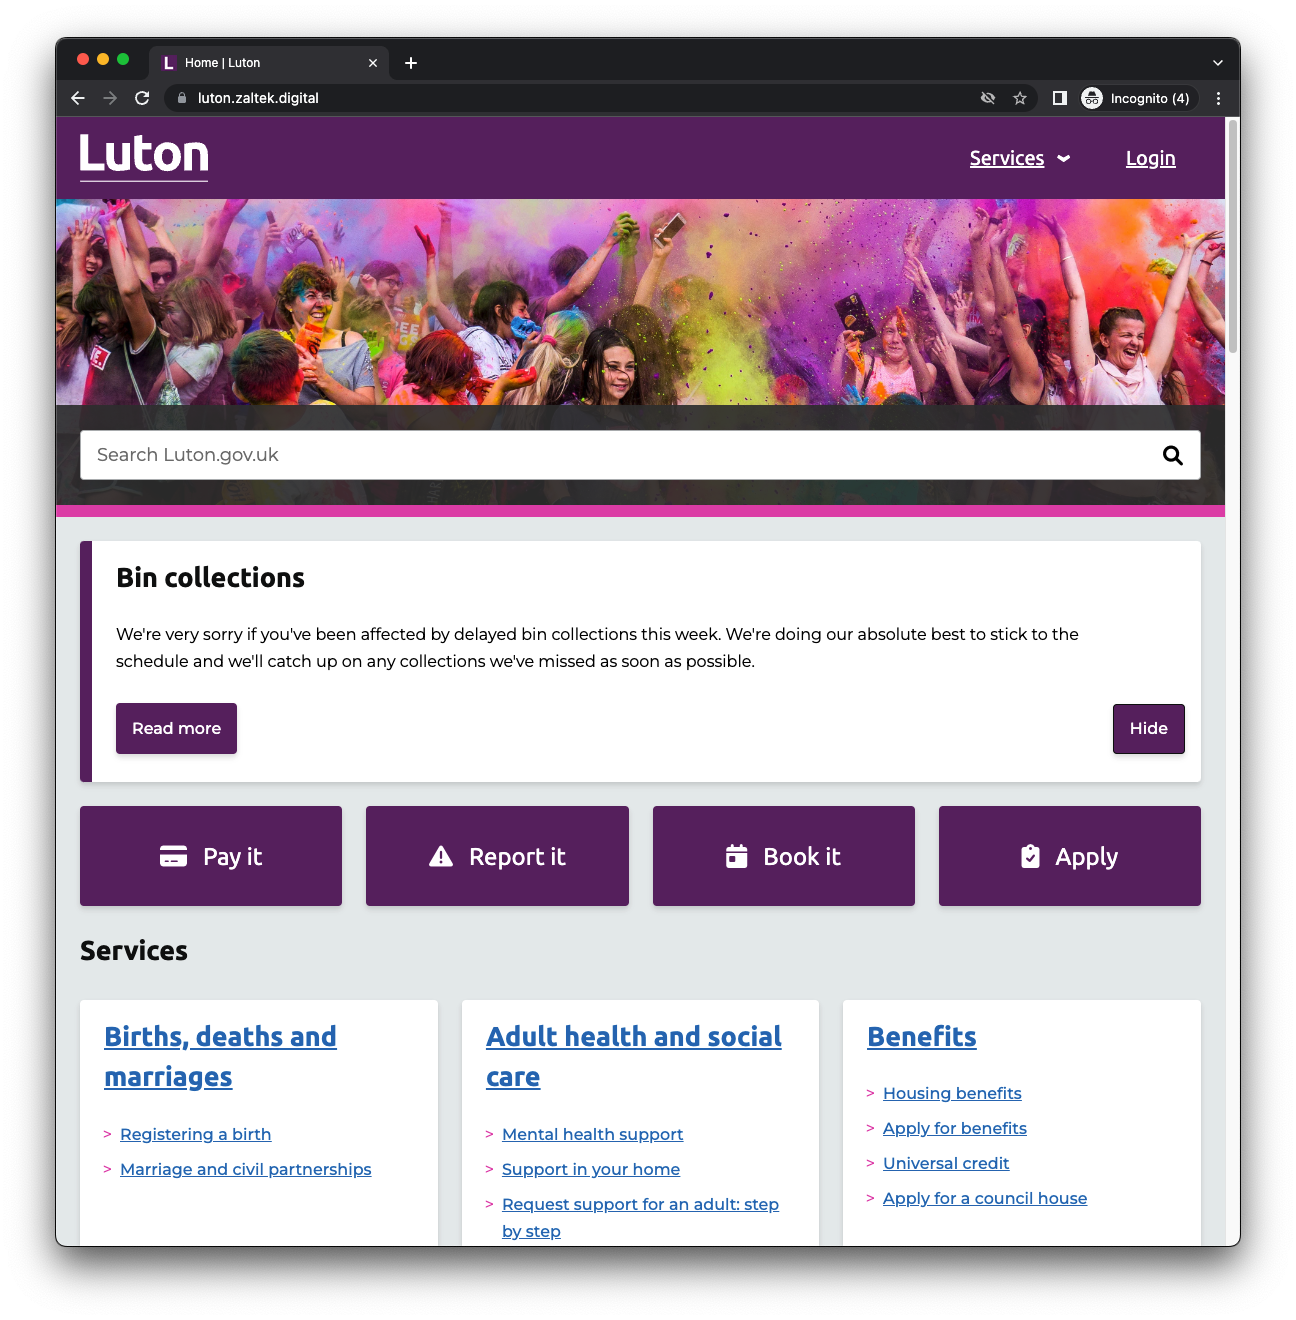 Luton's new homepage